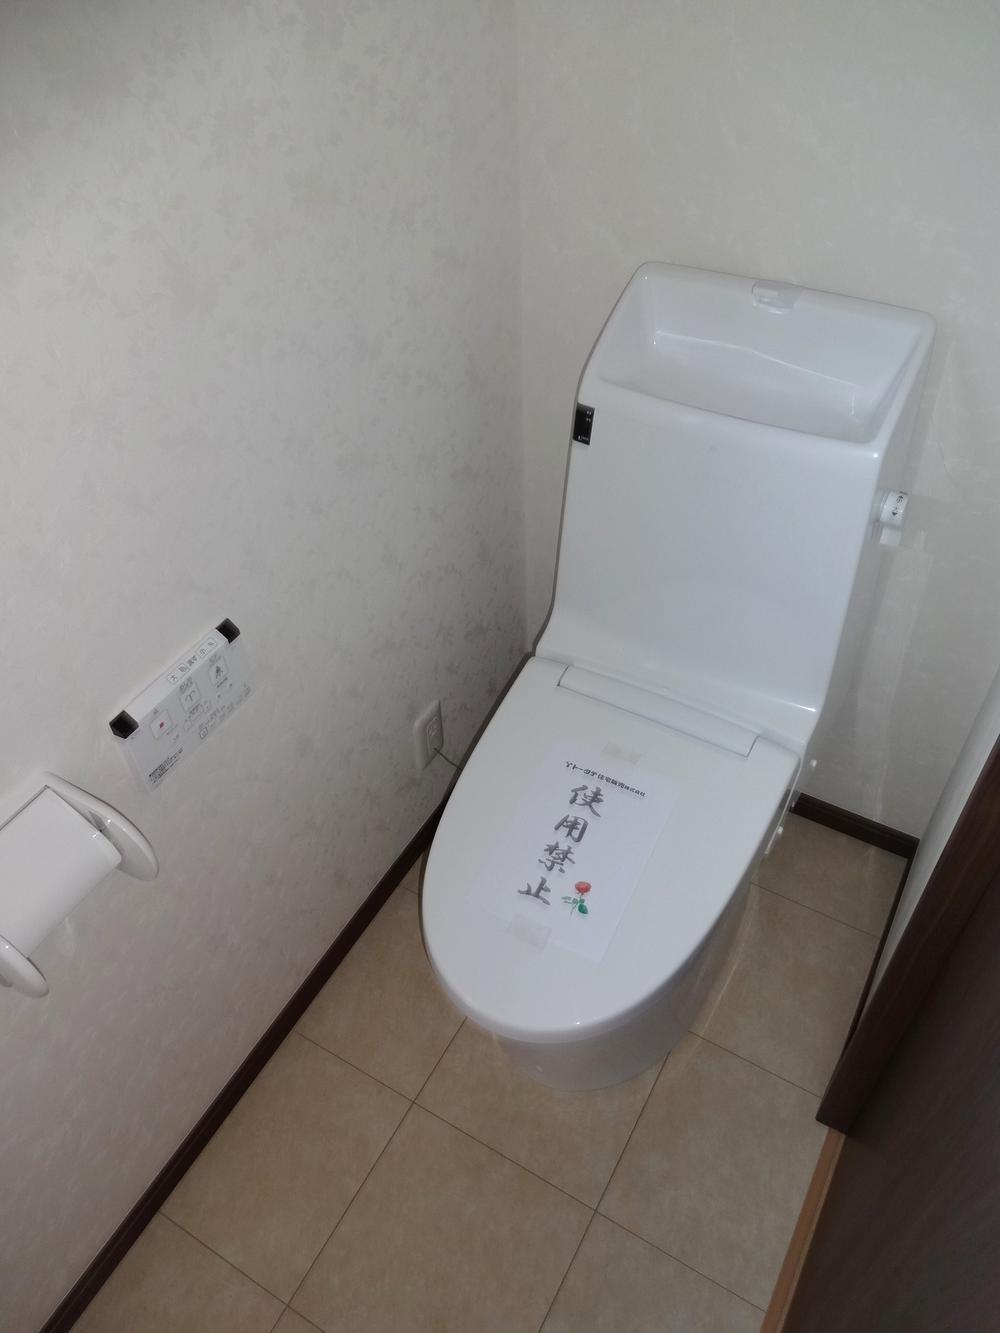 Toilet. Local (September 2013) Shooting